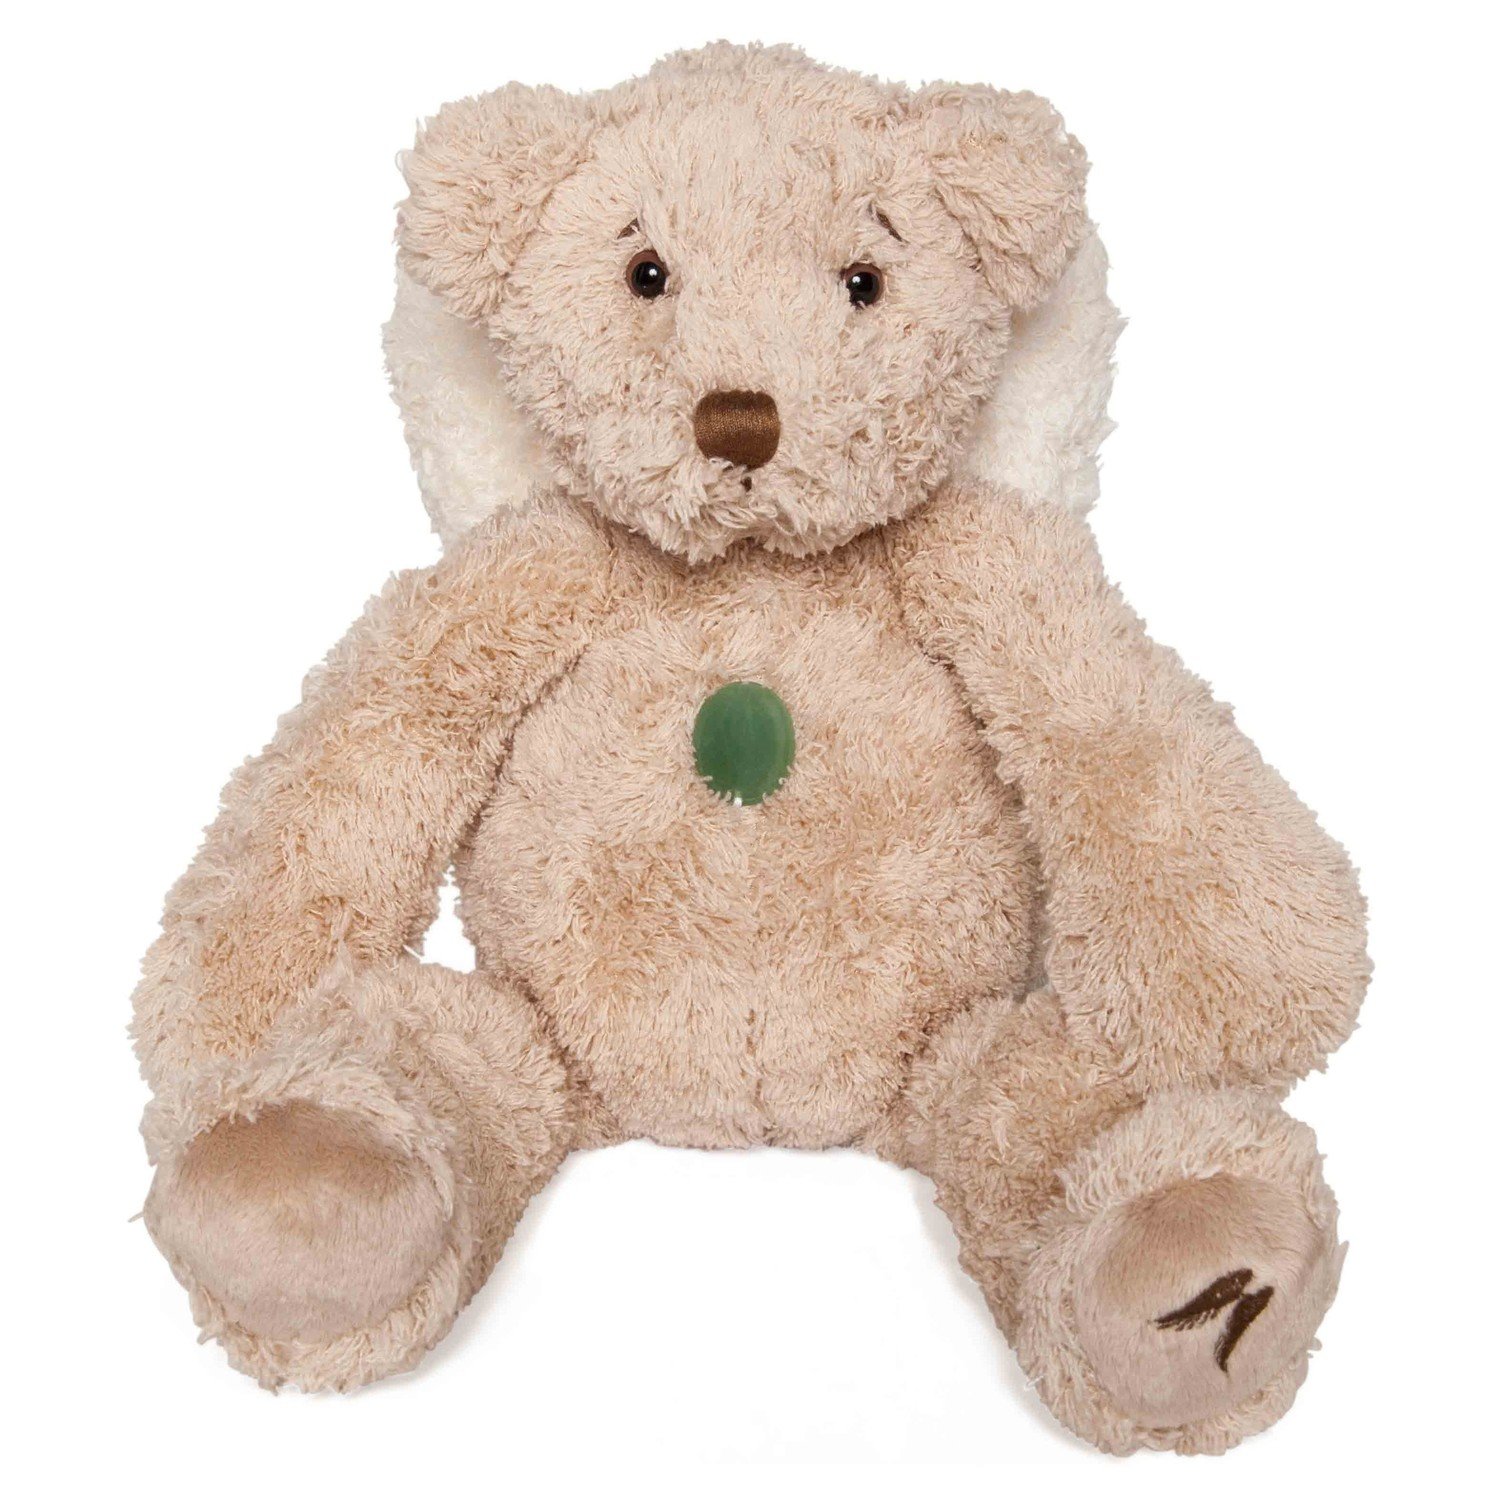 Teddy Bear - Hope, Angel of Healing